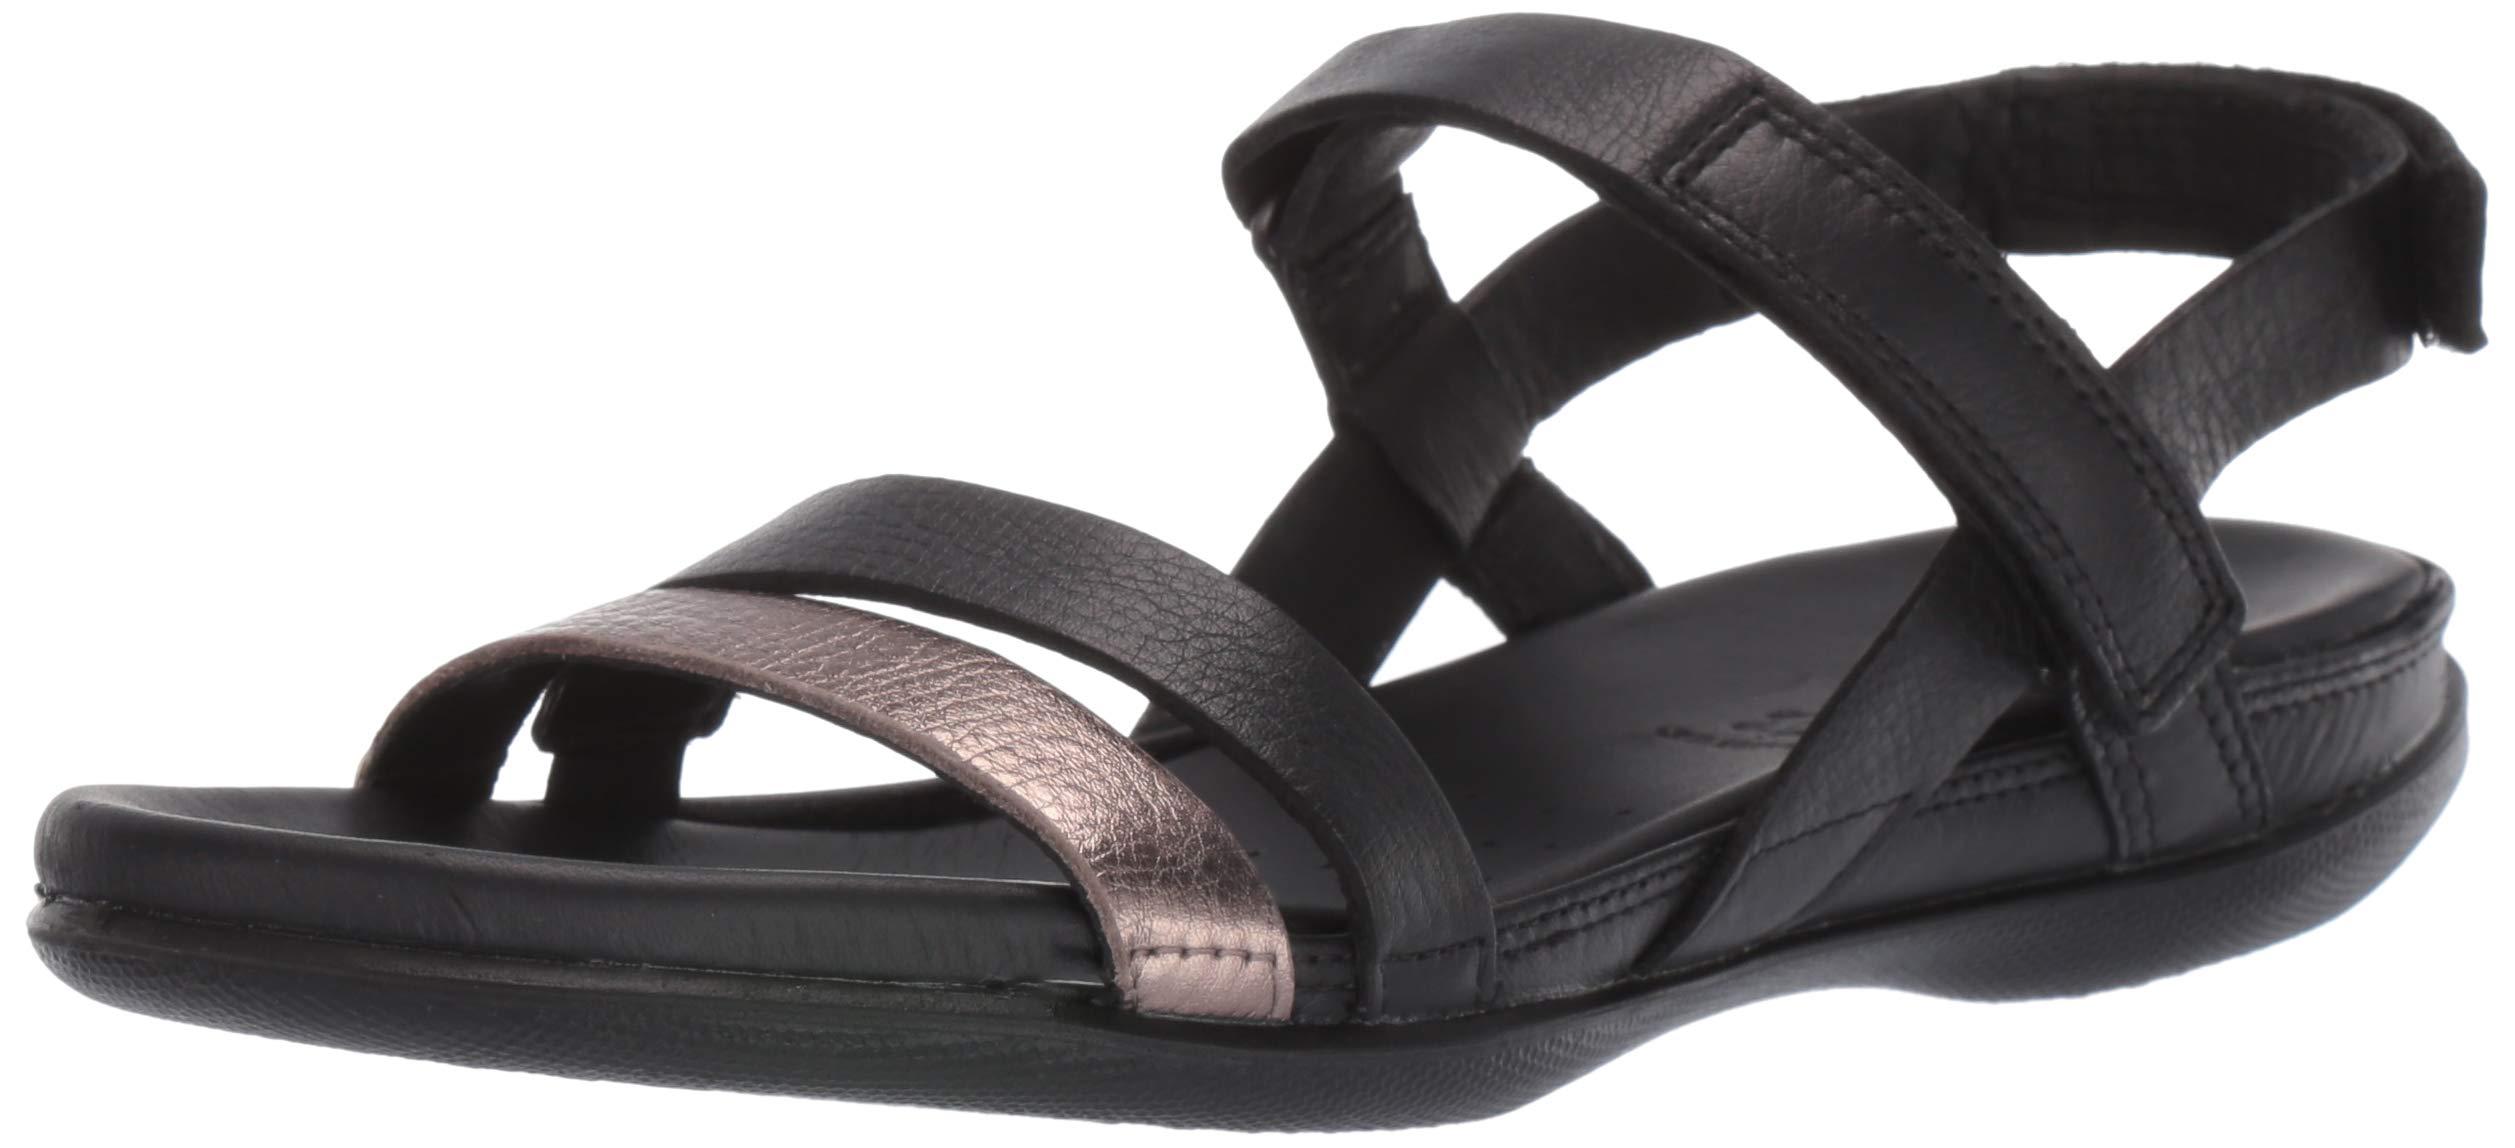 Ecco Leather Flash Ankle Strap Sandal in Stone Metallic/Black (Black) -  Save 60% - Lyst